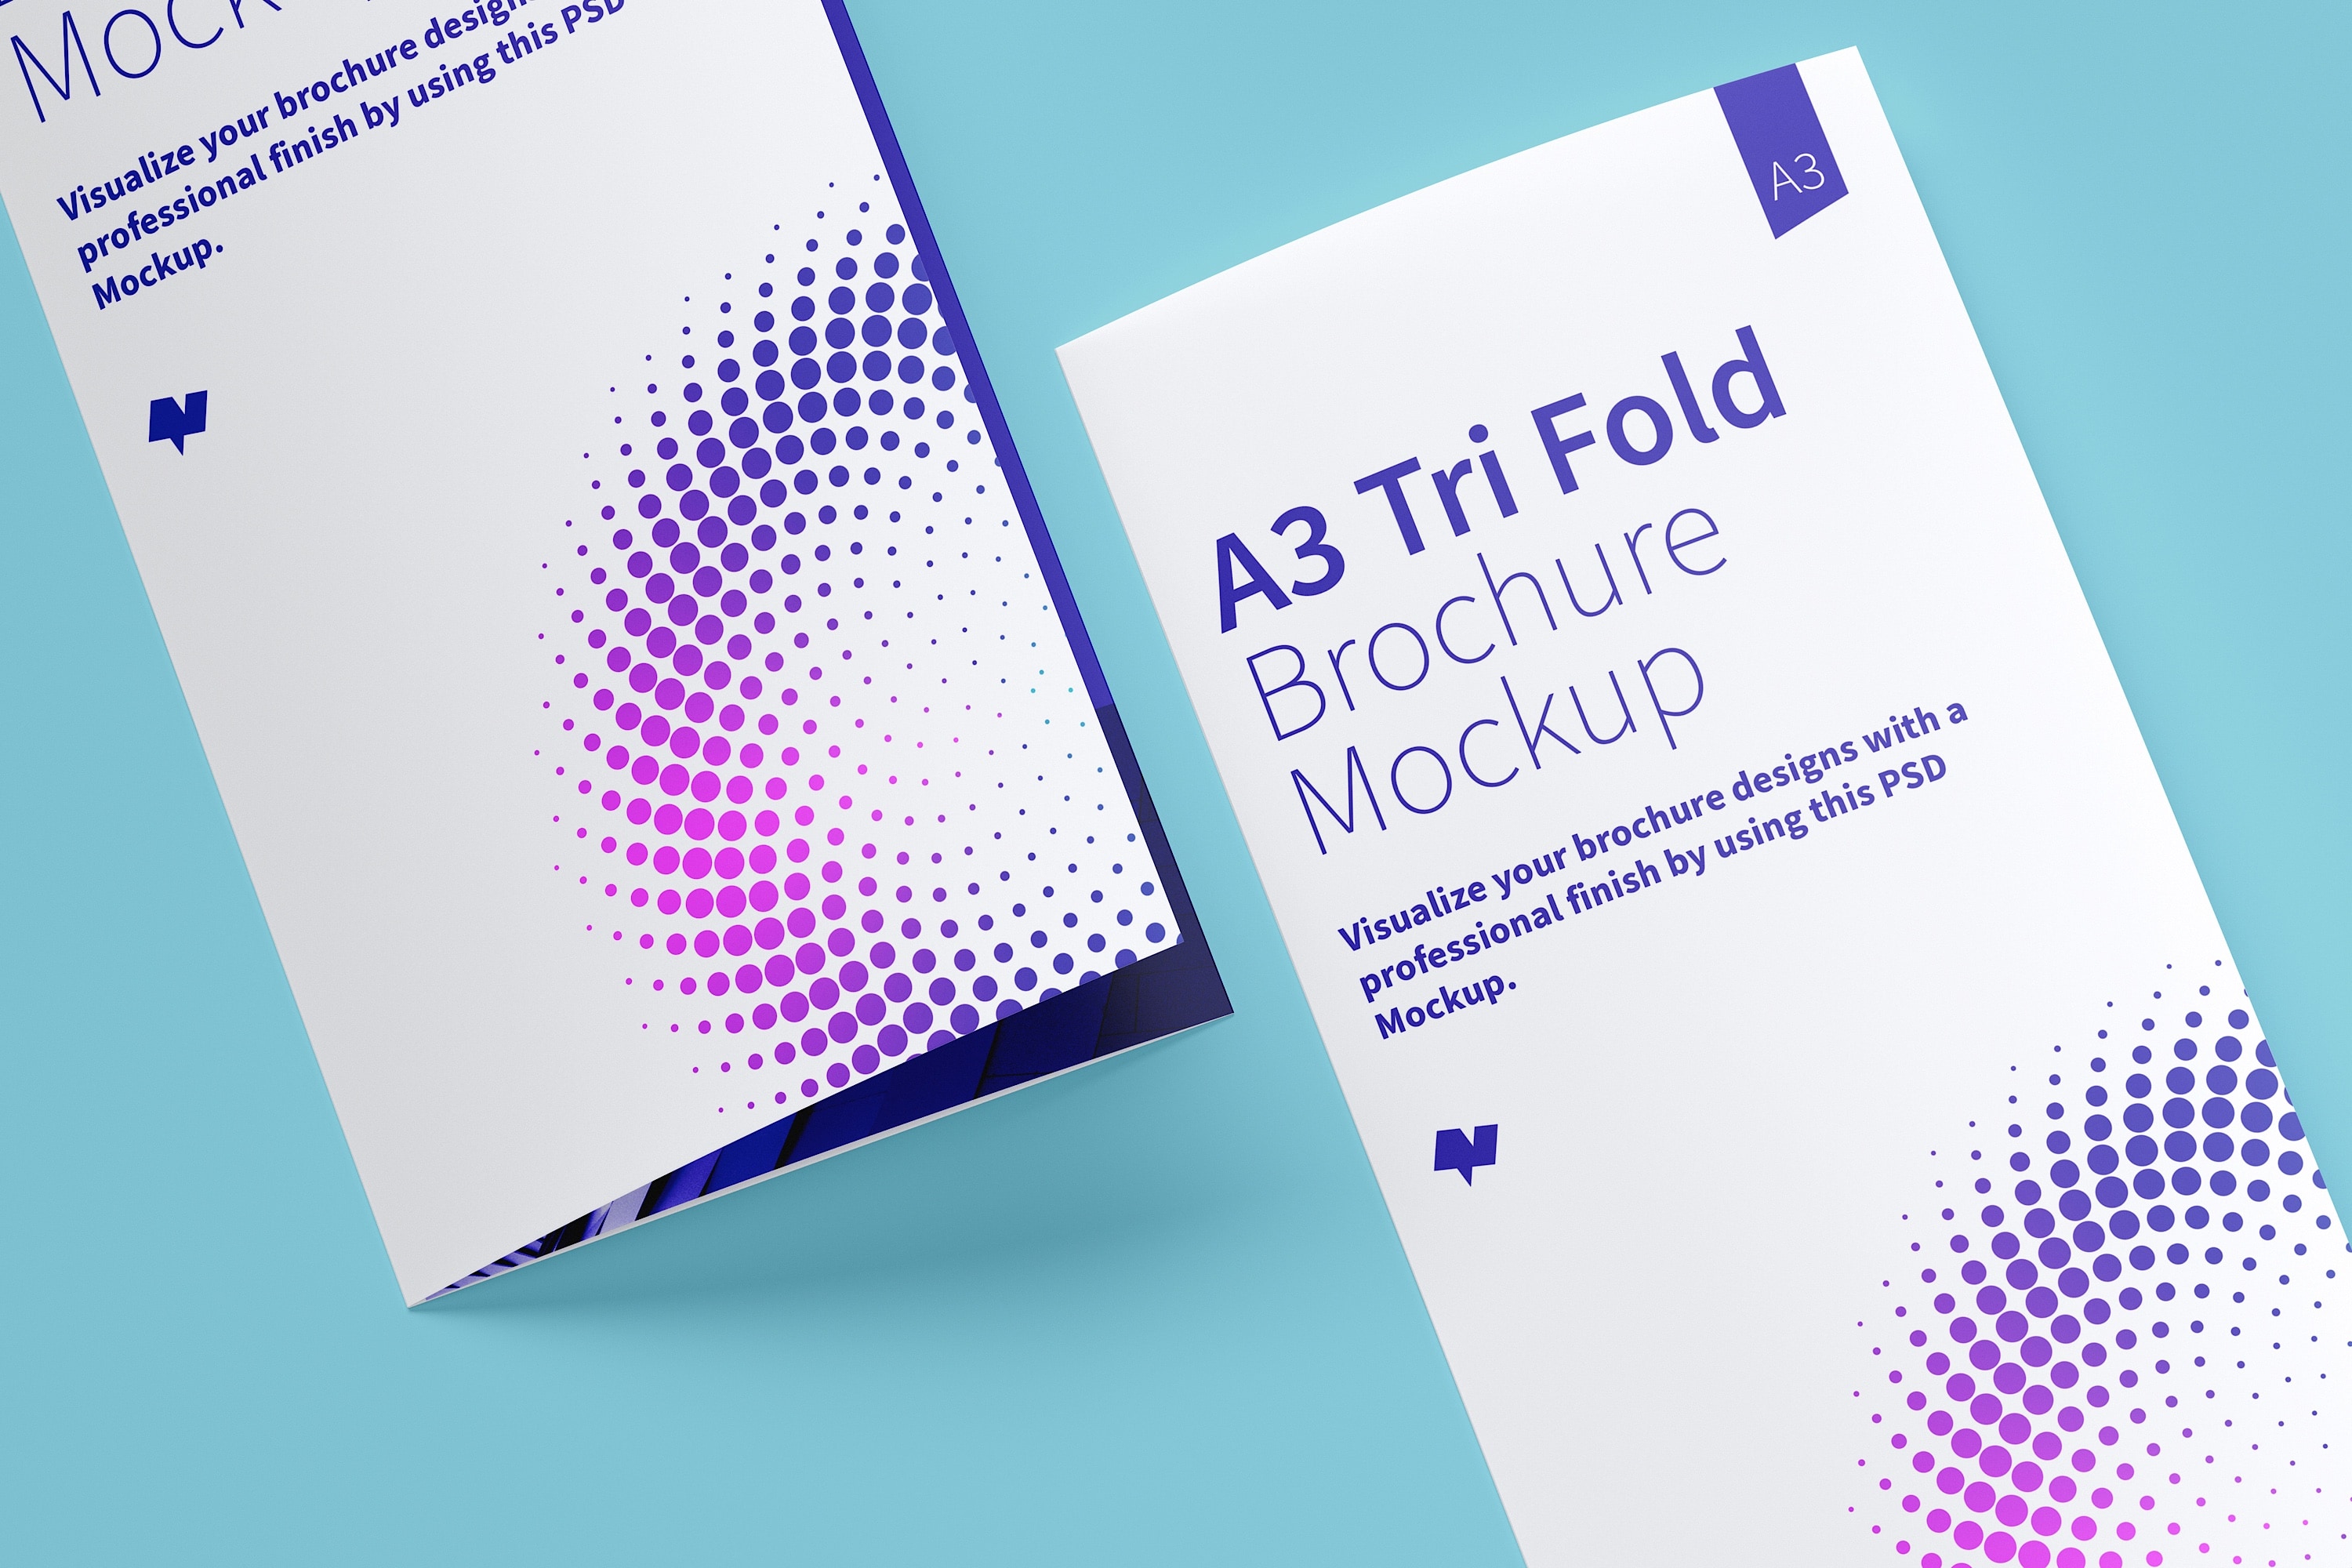 A3尺寸大小三折页传单小册子设计图预览样机05 A3 Trifold Brochure Mockup 05插图4